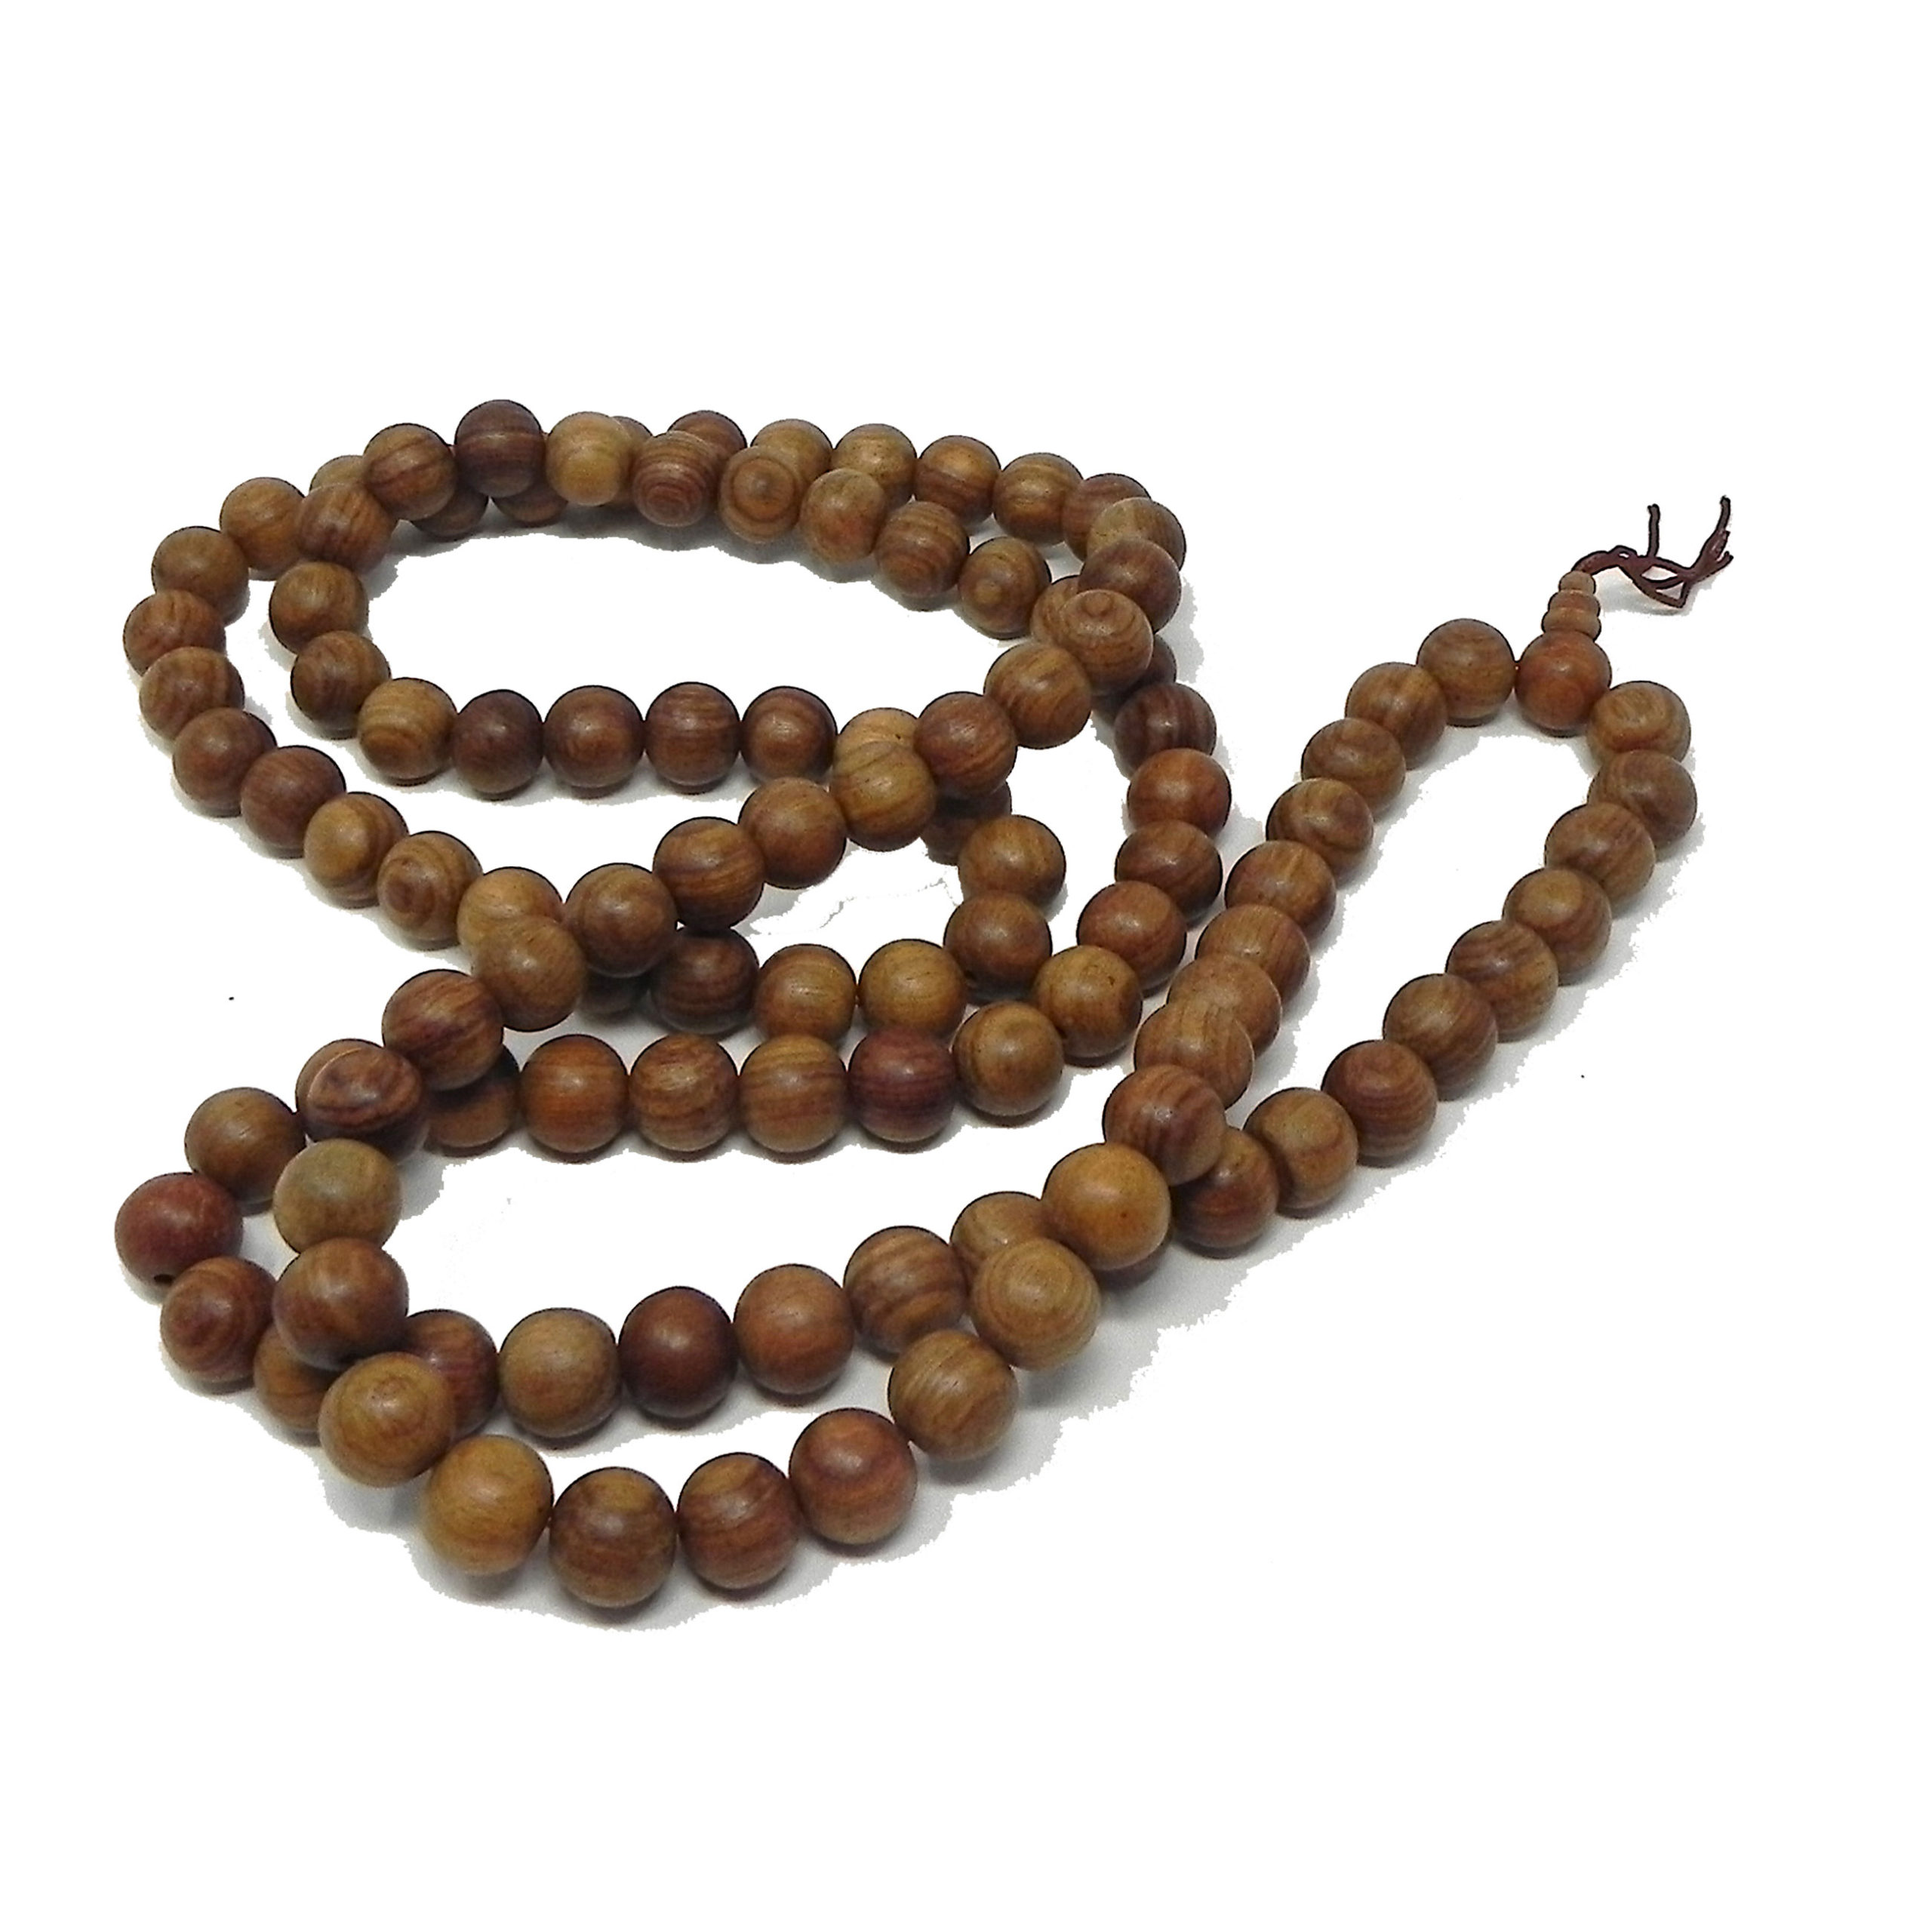 PNEIME 108 Mala Beads Necklace - 8mm Tibetan Prayer Beads -Yoga Meditation  Beads Necklace - Hand Knotted Japa Mala…